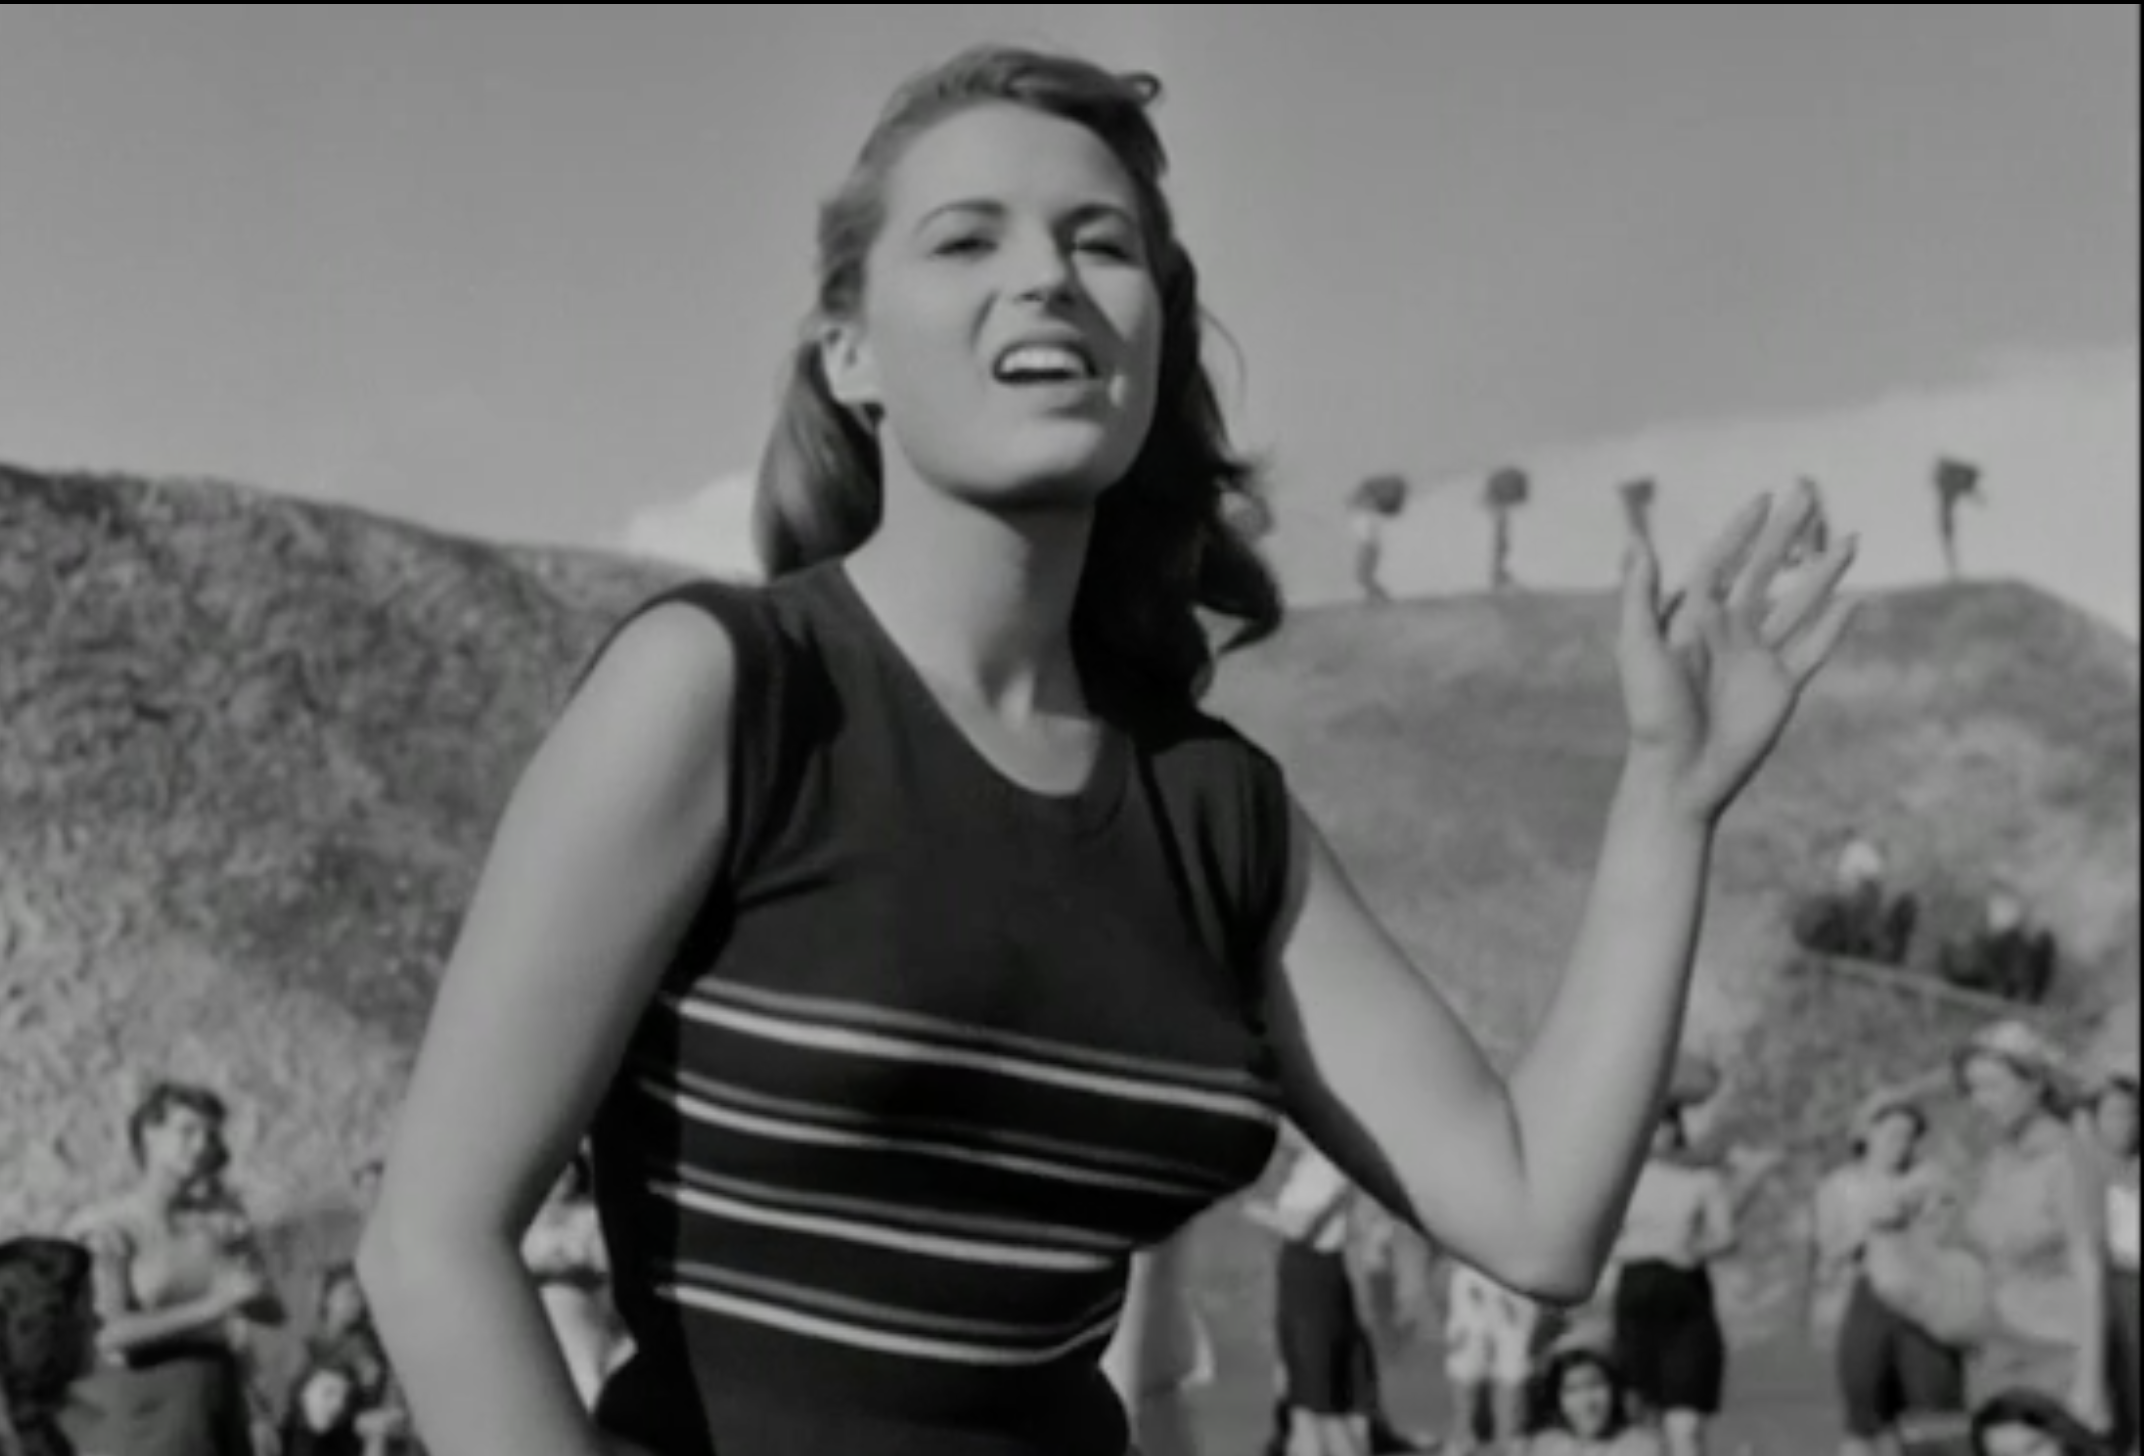  Silvana Mangano in Riso amaro (1948) di G. De Santis – screenshot da terzi